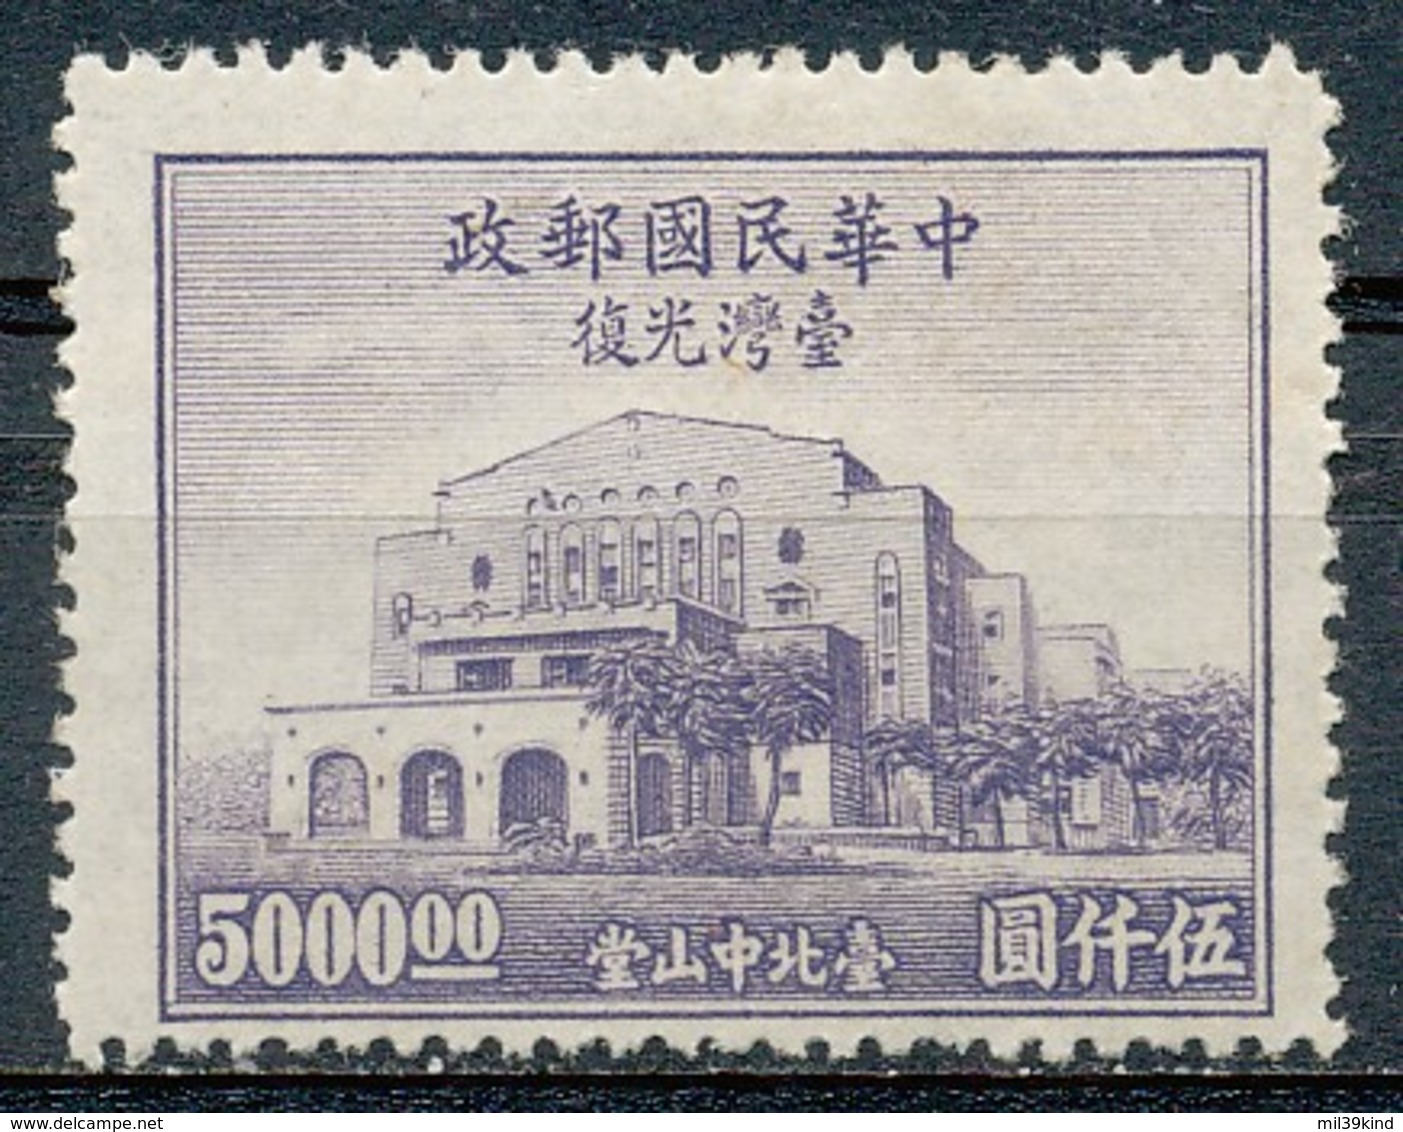 REPUBLIQUE DE CHINE  - 1947  - Neuf - 1912-1949 Repubblica